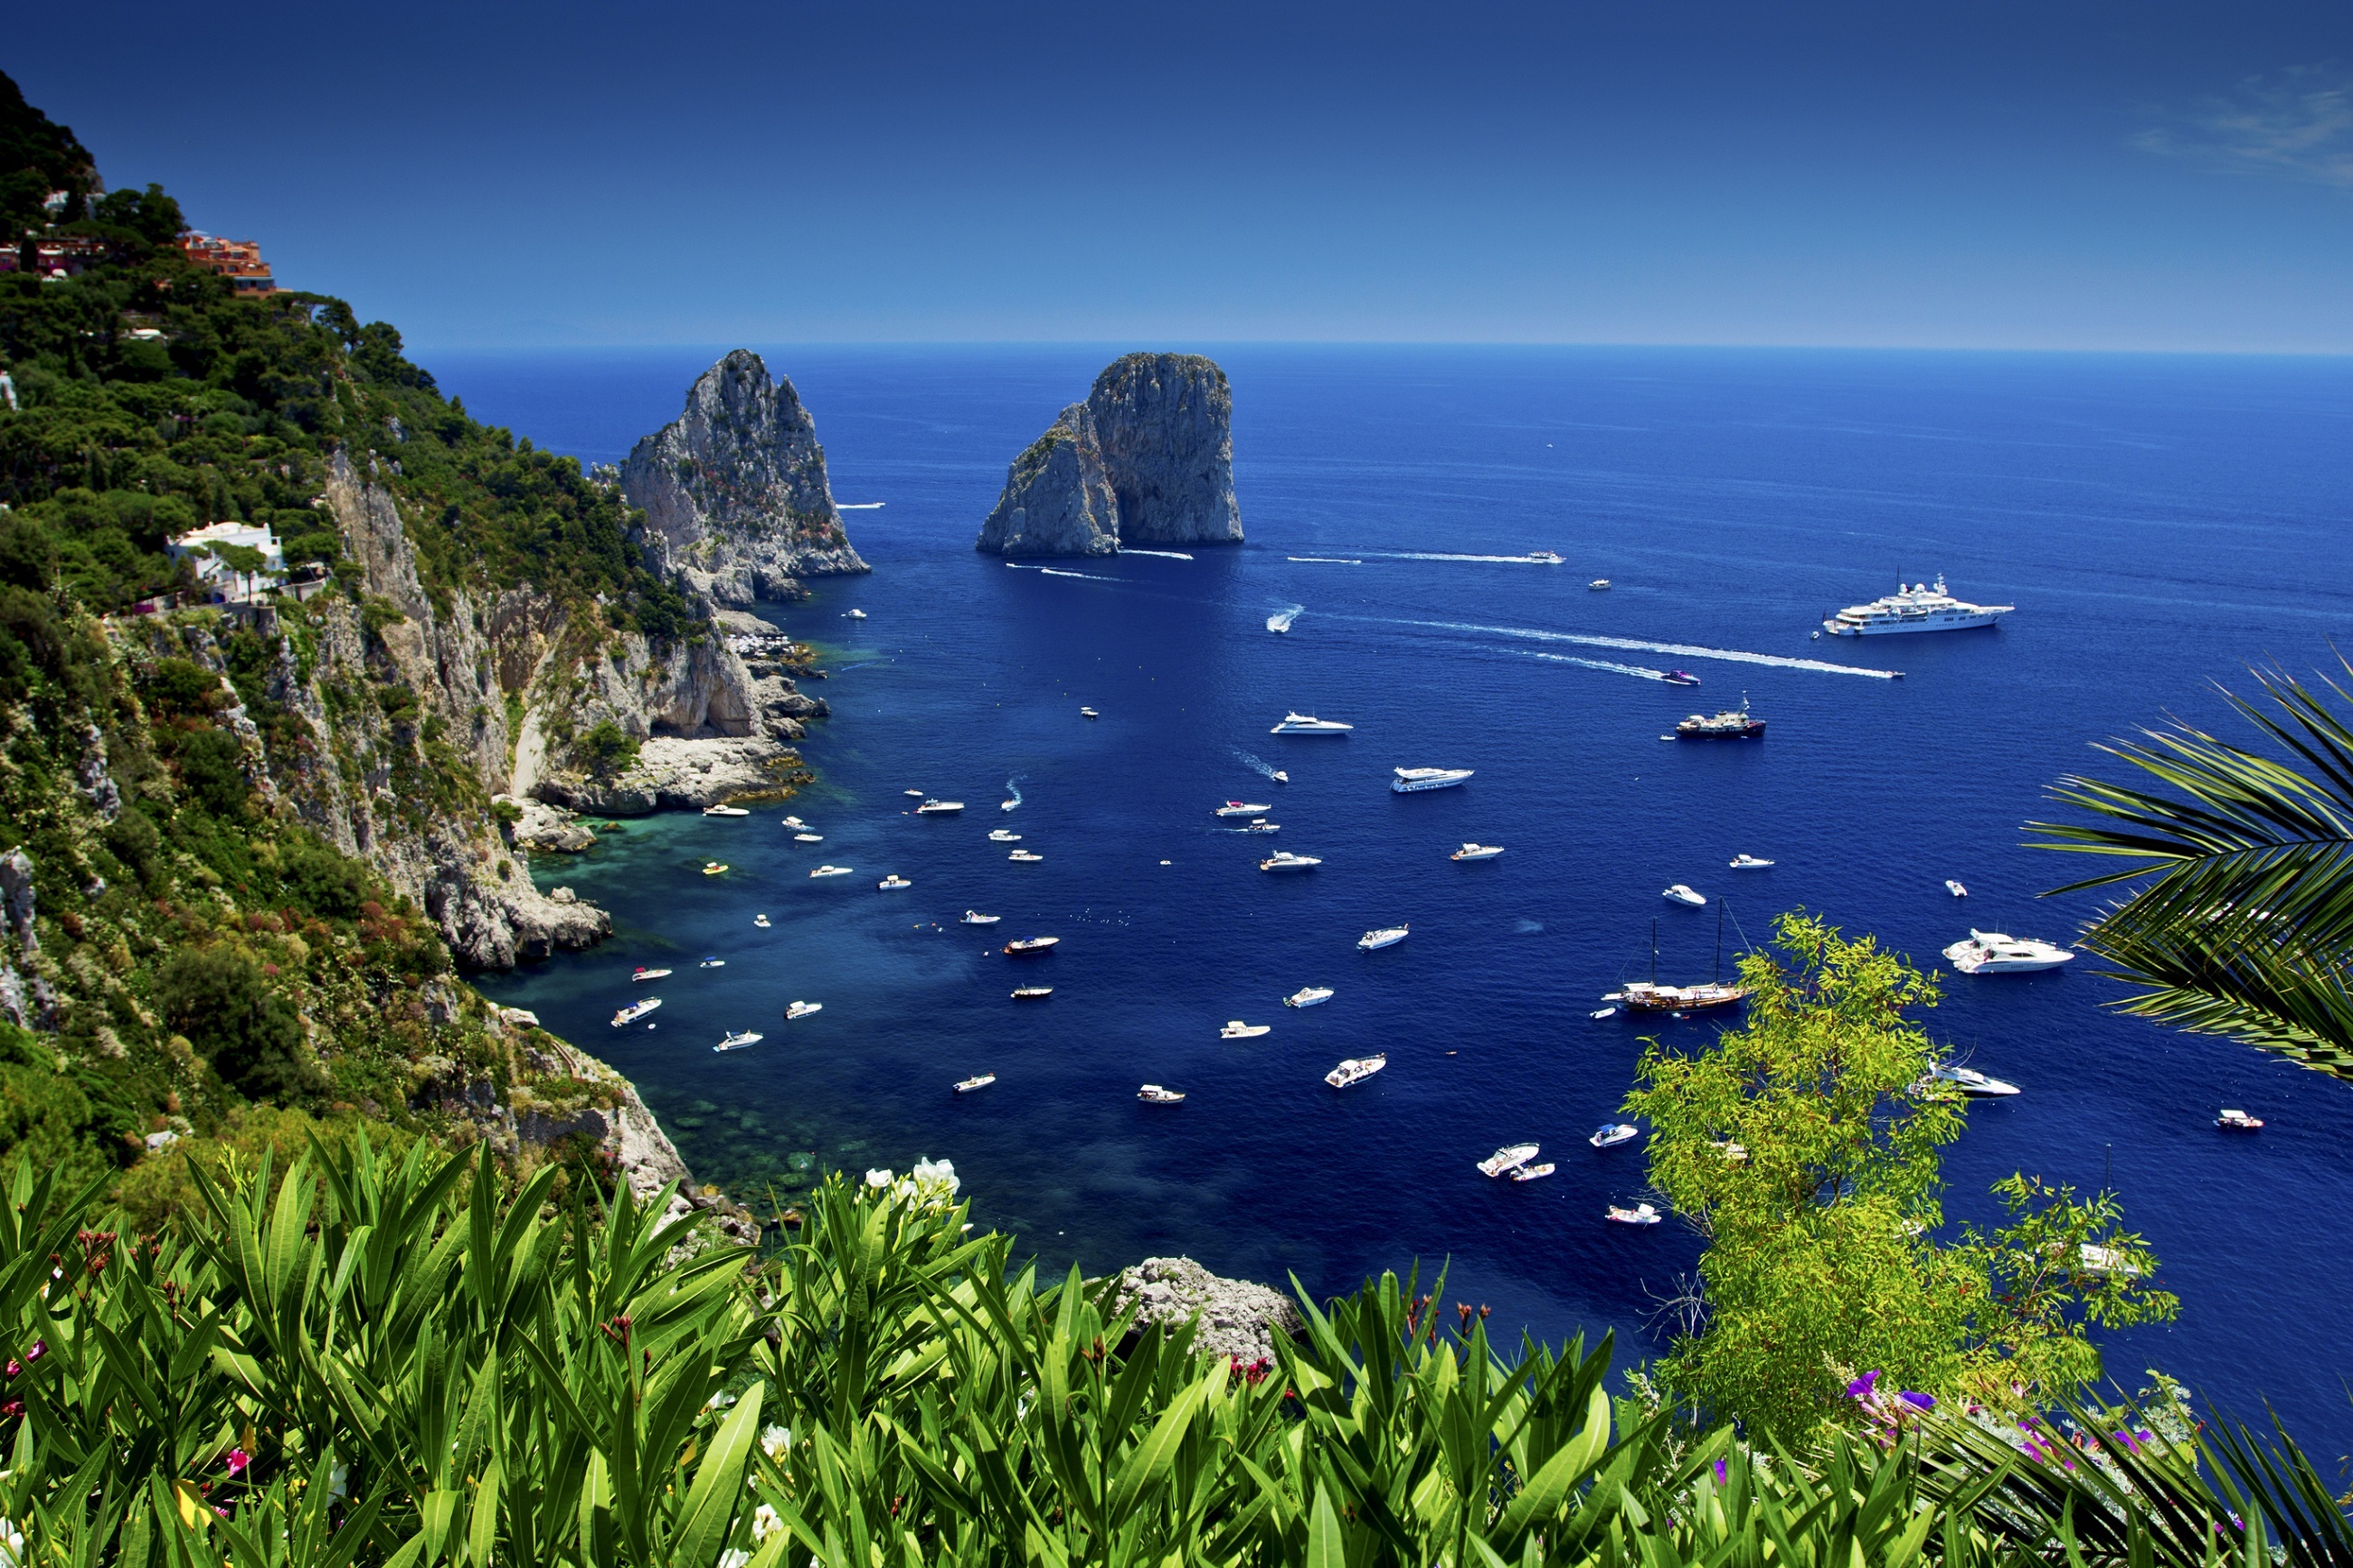 Как называется вид на море. Остров капри. Остров Карпи Италия. Три скалы на острове капри. Италия капри море.